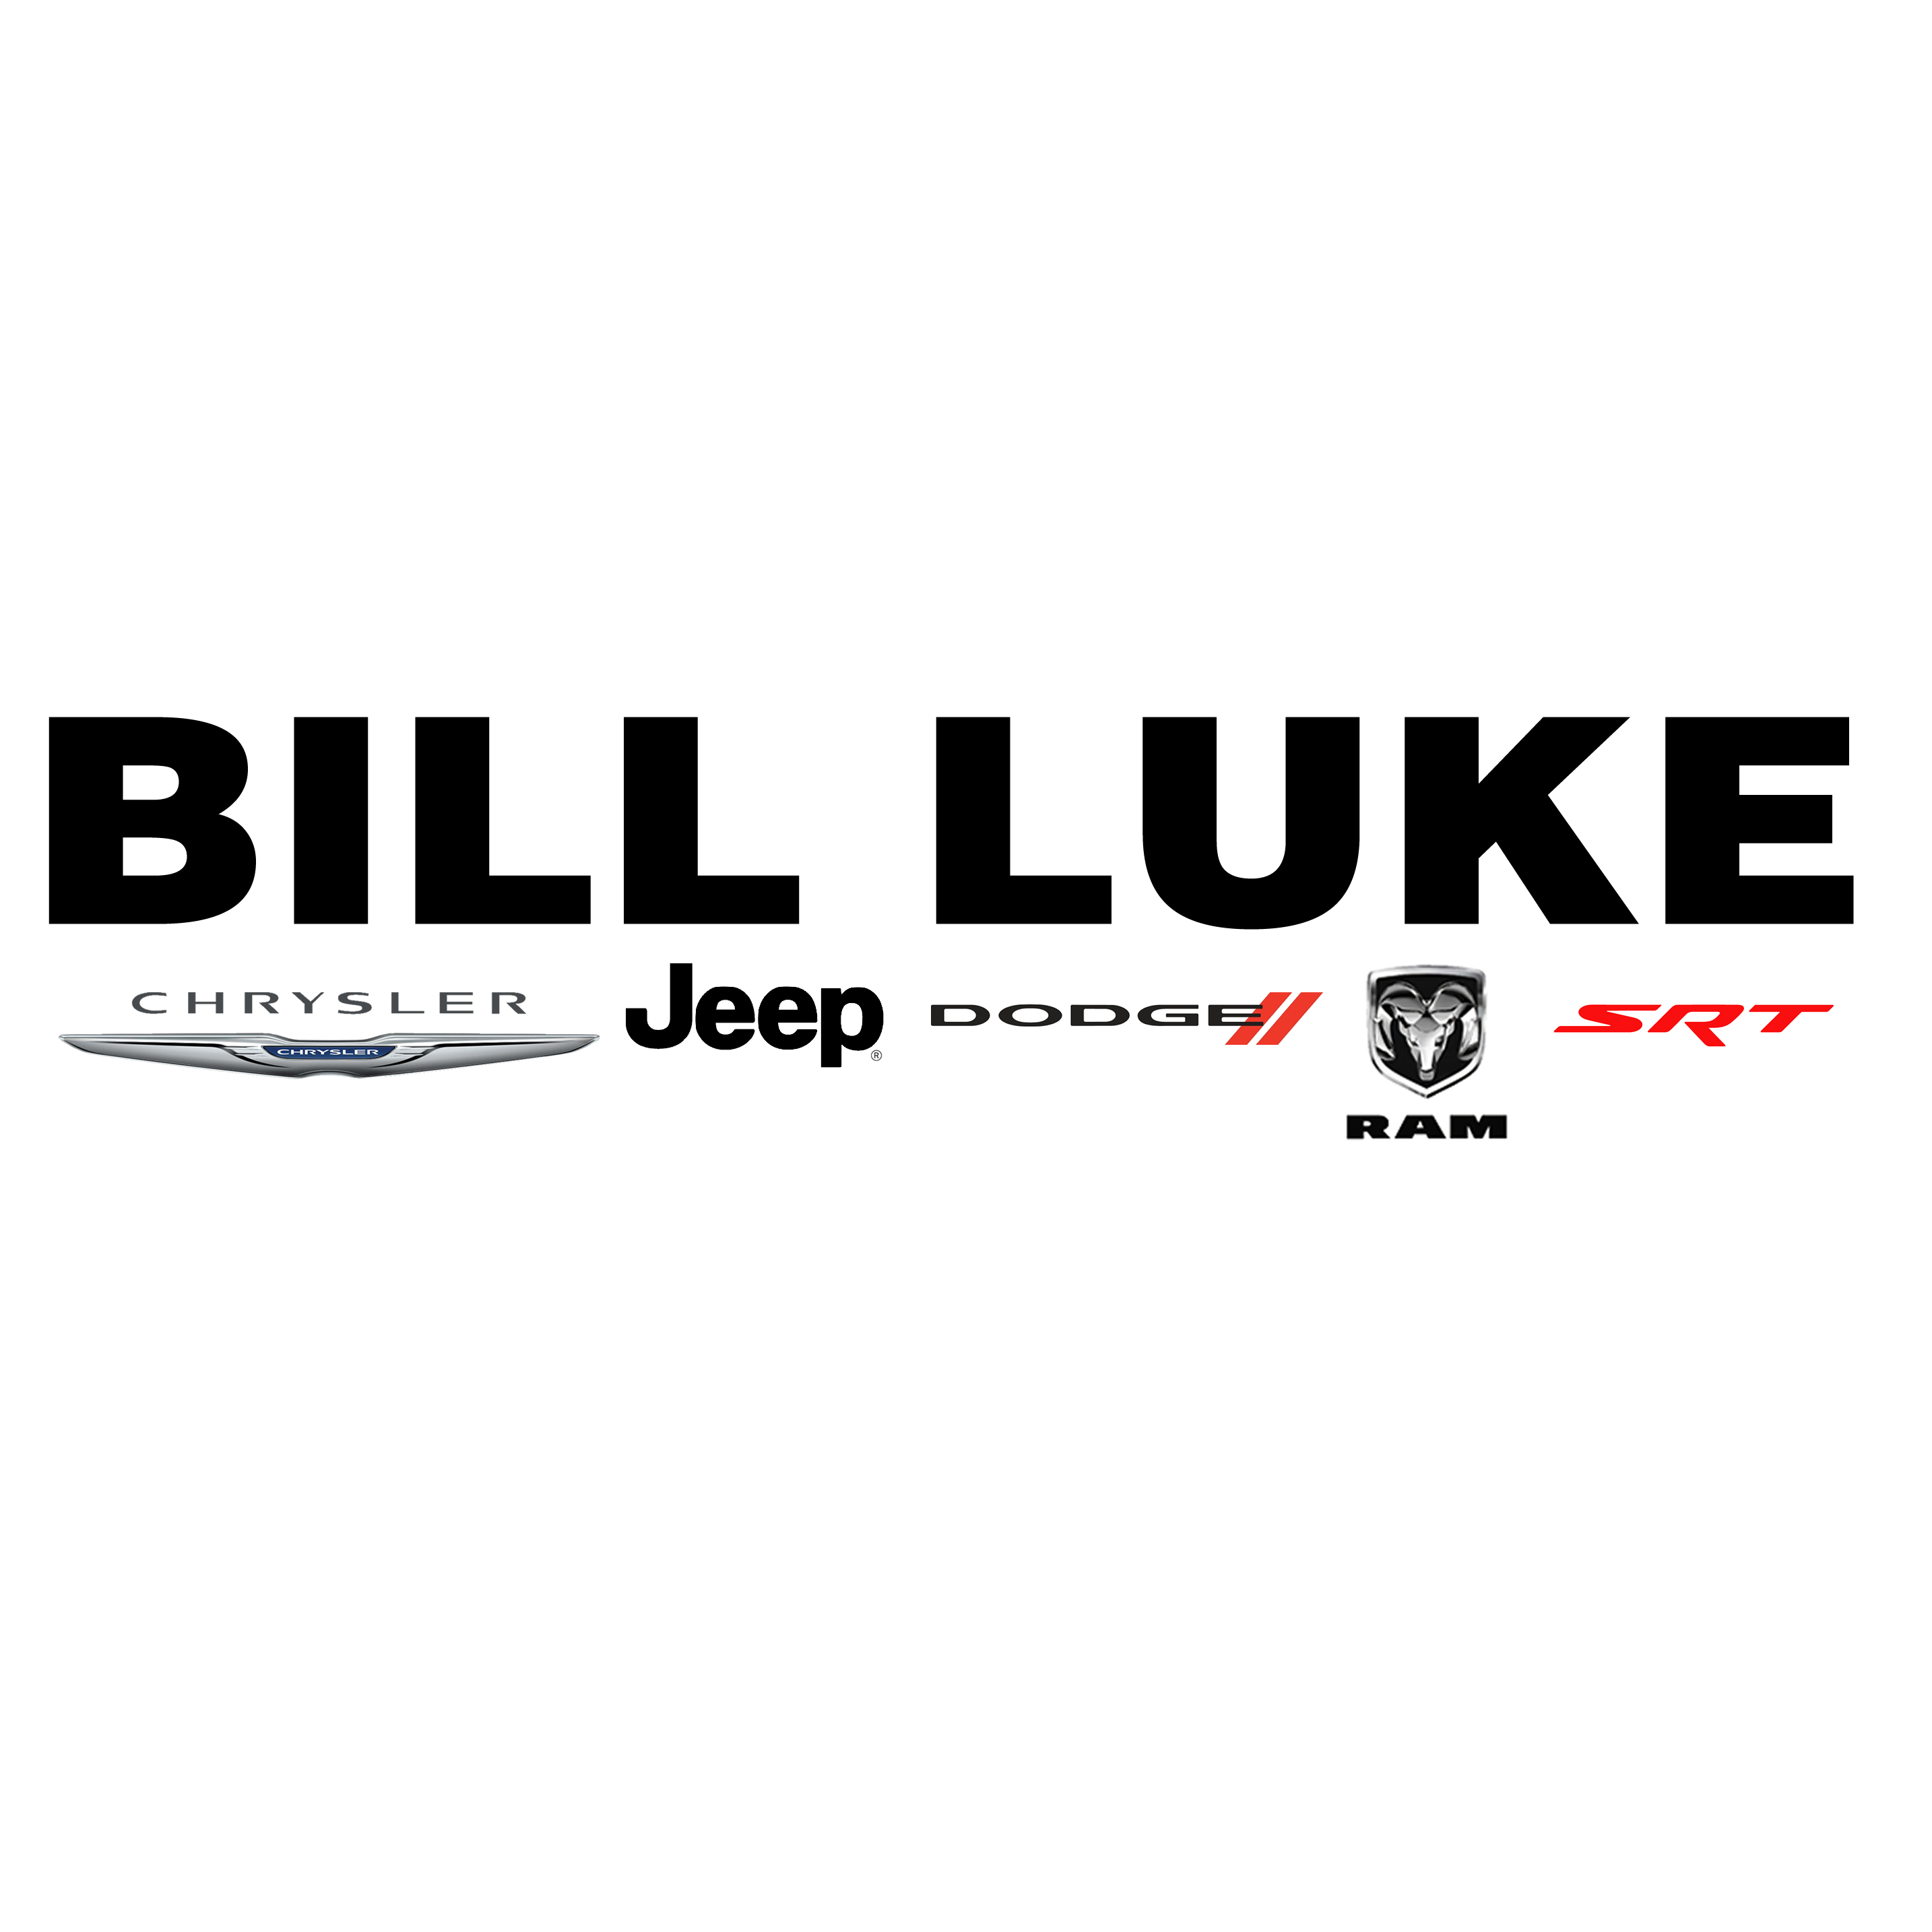 Bill Luke Chrysler Jeep Dodge RAM - Phoenix, AZ 85015 - (602)249-1234 | ShowMeLocal.com